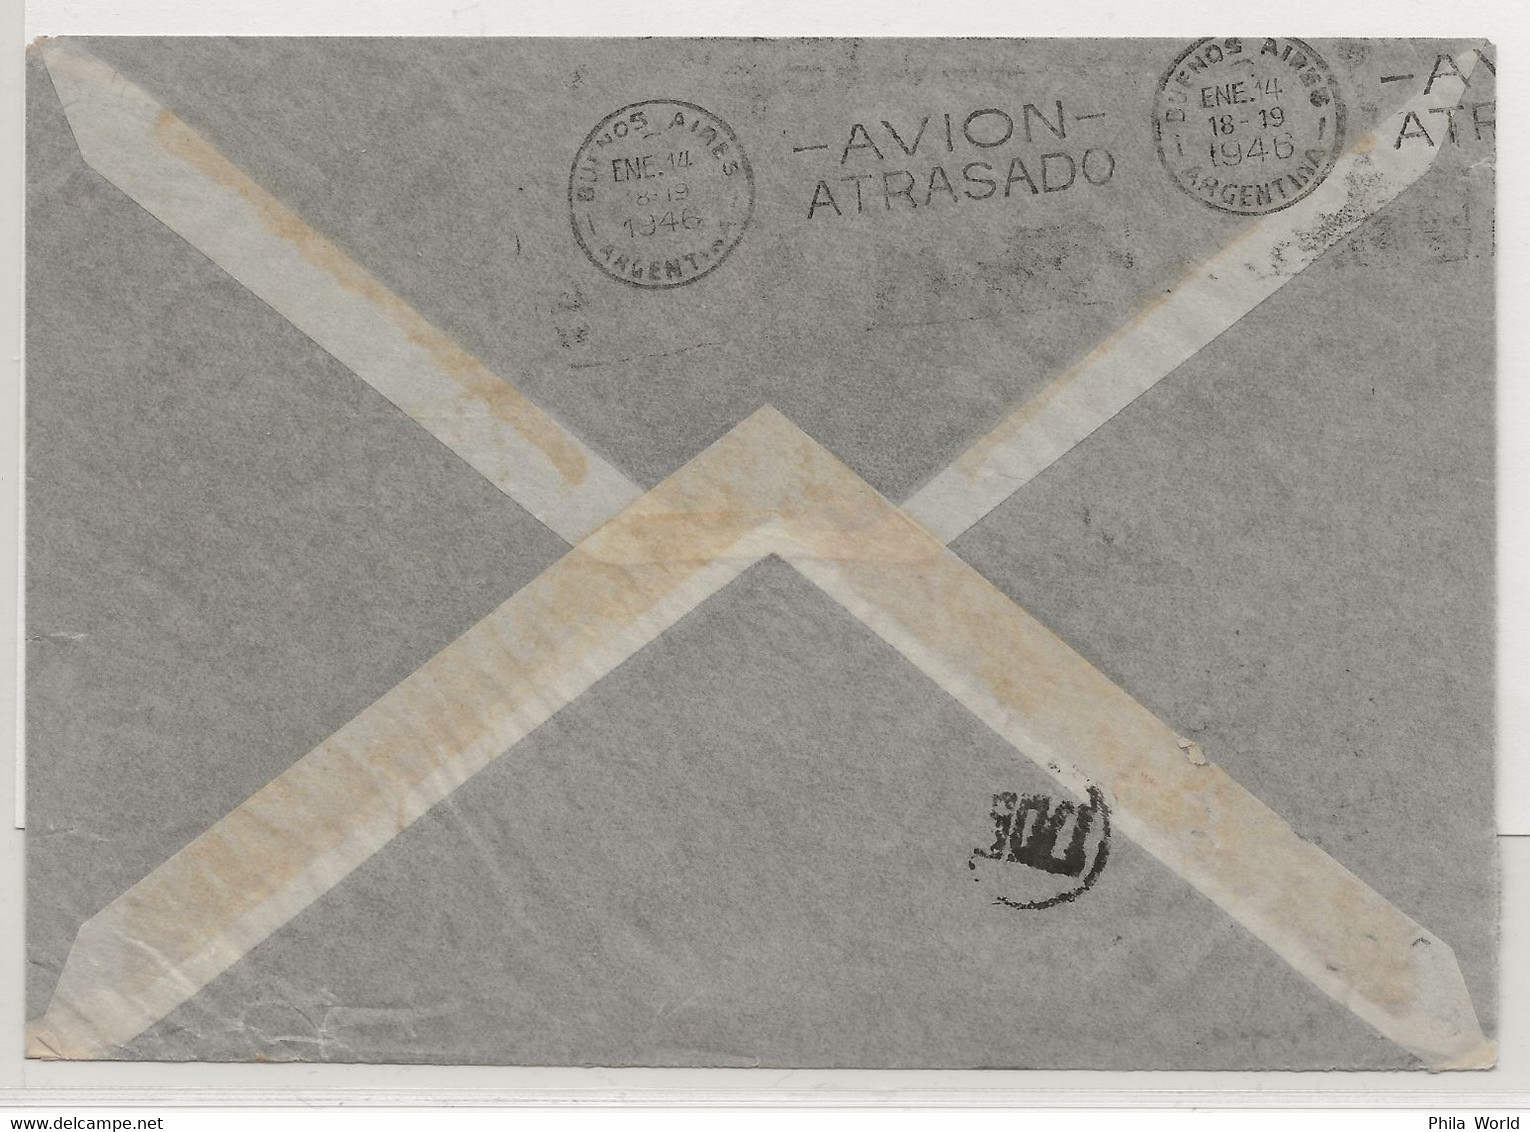 VOL AVION ACCIDENTE - 1946 SUEDE - ARGENTINE Avec Cachet AVION ATRASADO Départ GOTEBORG Air Mail Crash Cover - Storia Postale